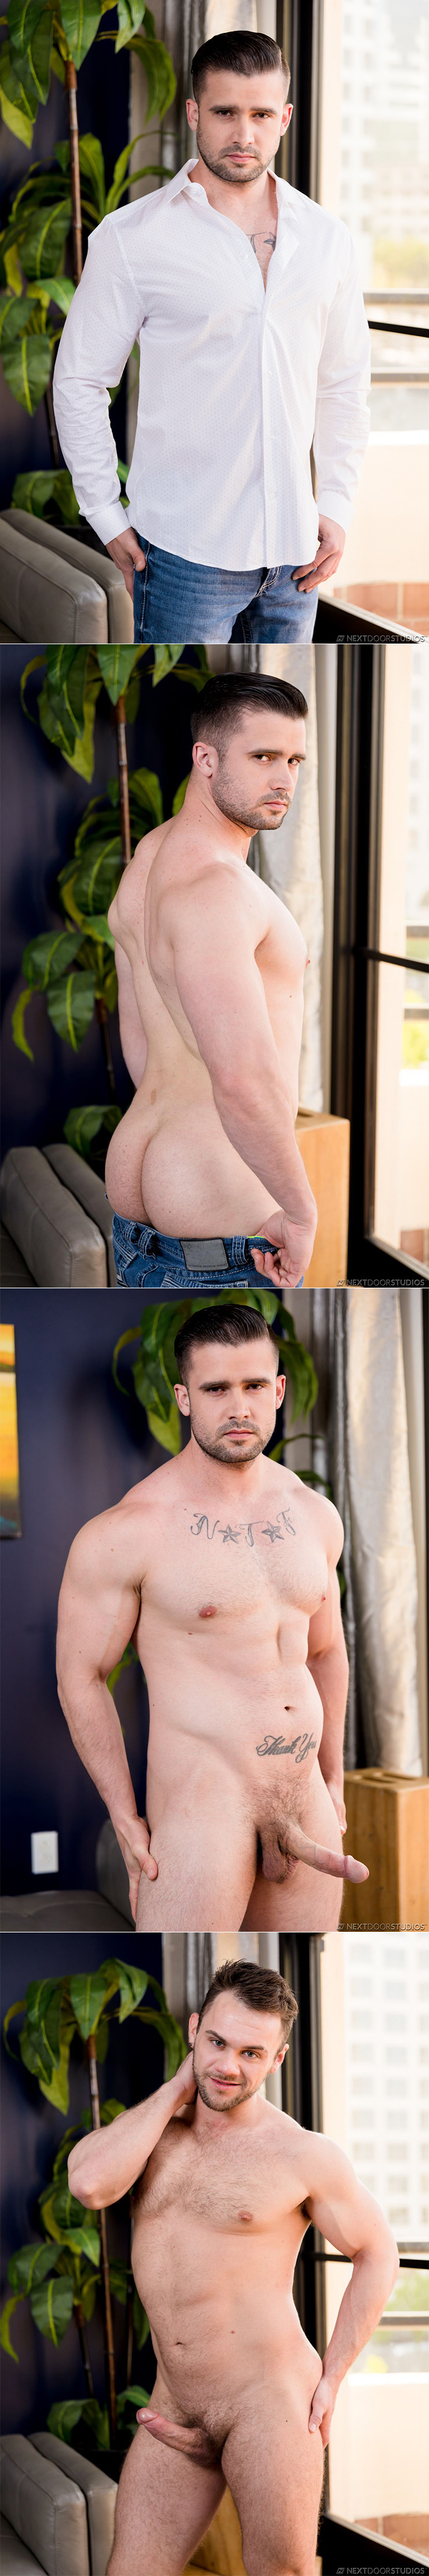 NextDoorStudios Shoot Secrets Mathias Raw-Fucks Blaze Austin Male Feet Gay Bareback Porn Photoshoot Fantasy 1